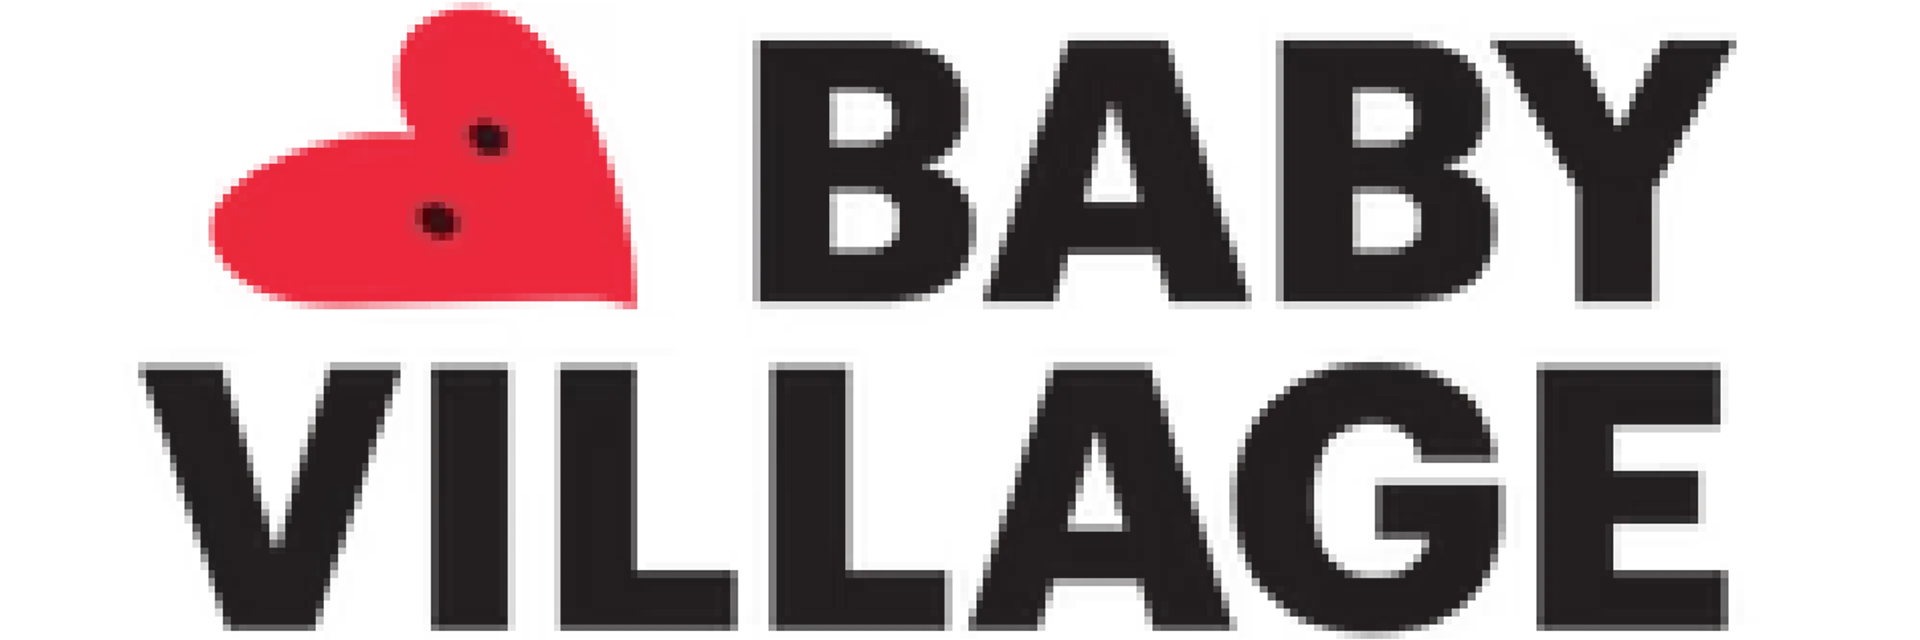 BABY VILLAGE logo of current flyer